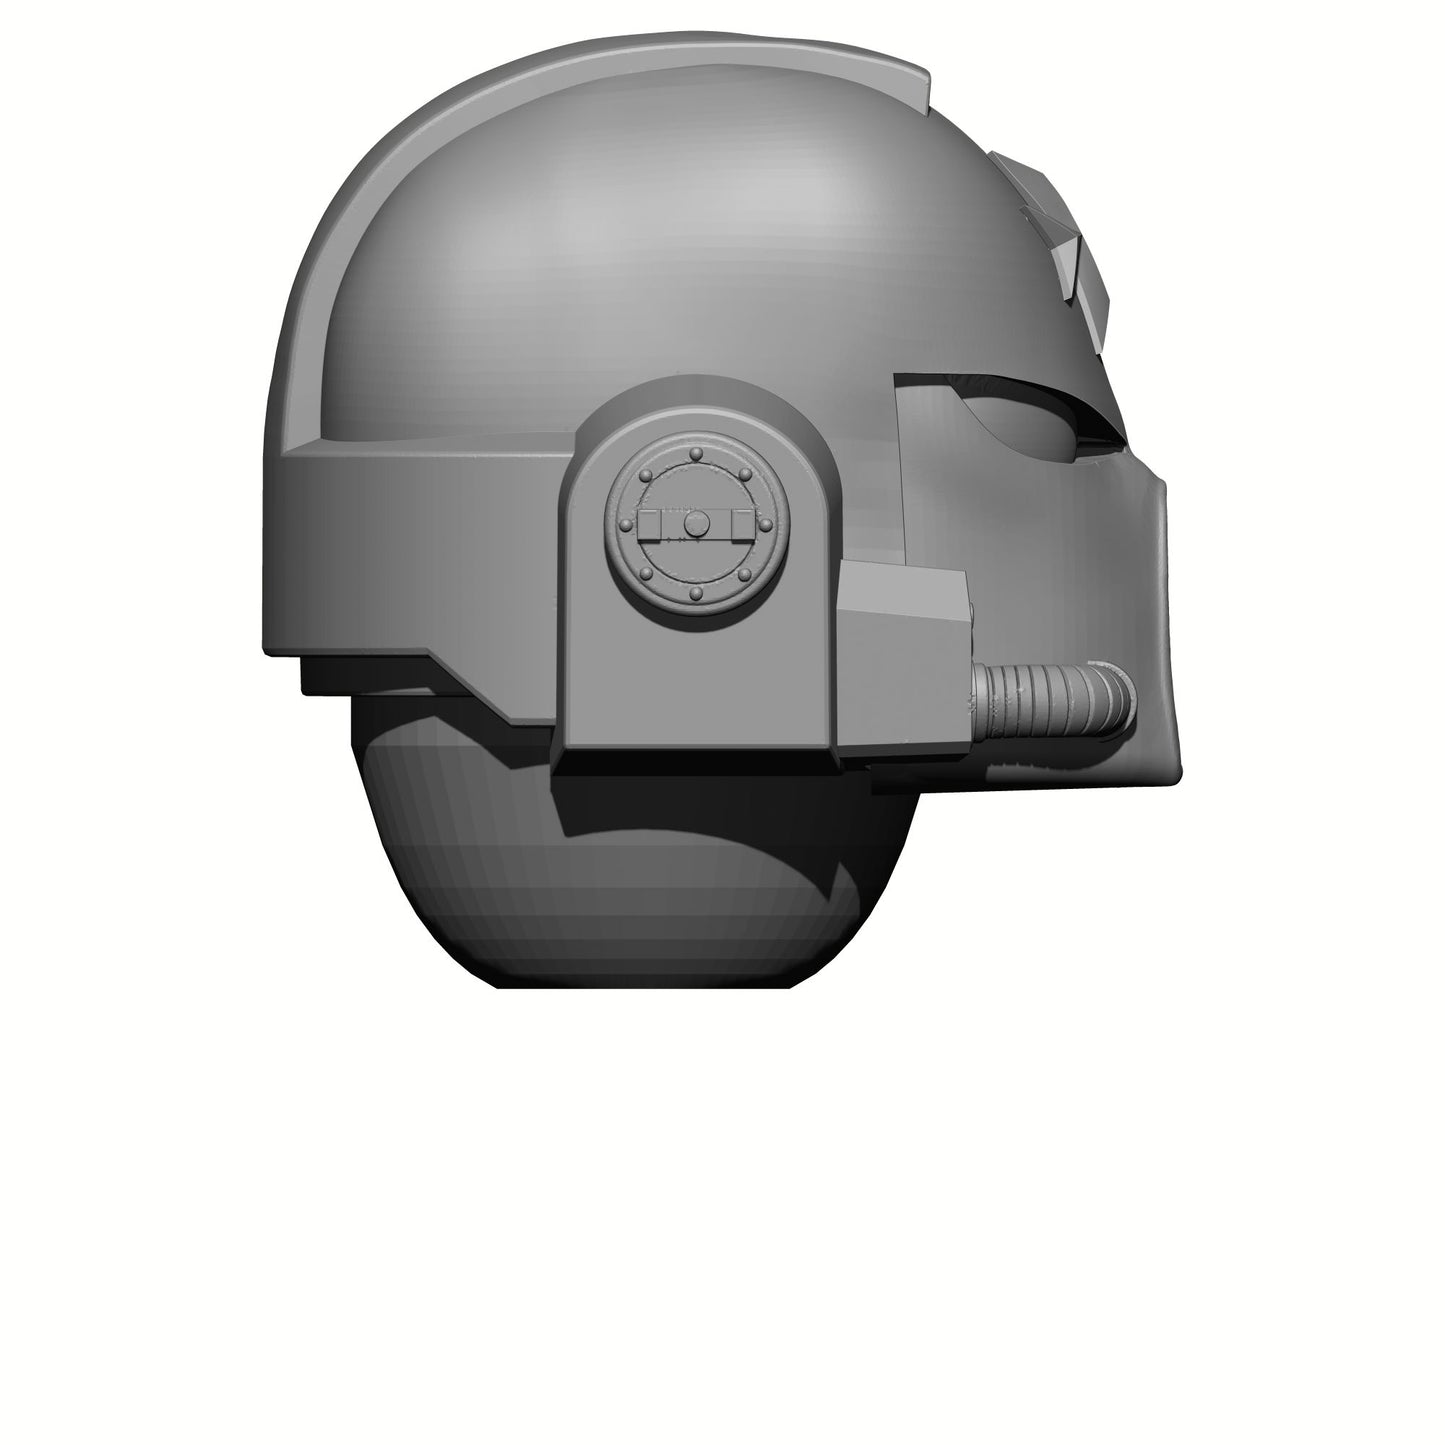 Templar Knights MK VII Helmet: Helmet Swap for JoyToy Warhammer 40K Compatible Space Marine 1:18 4" Action Figures